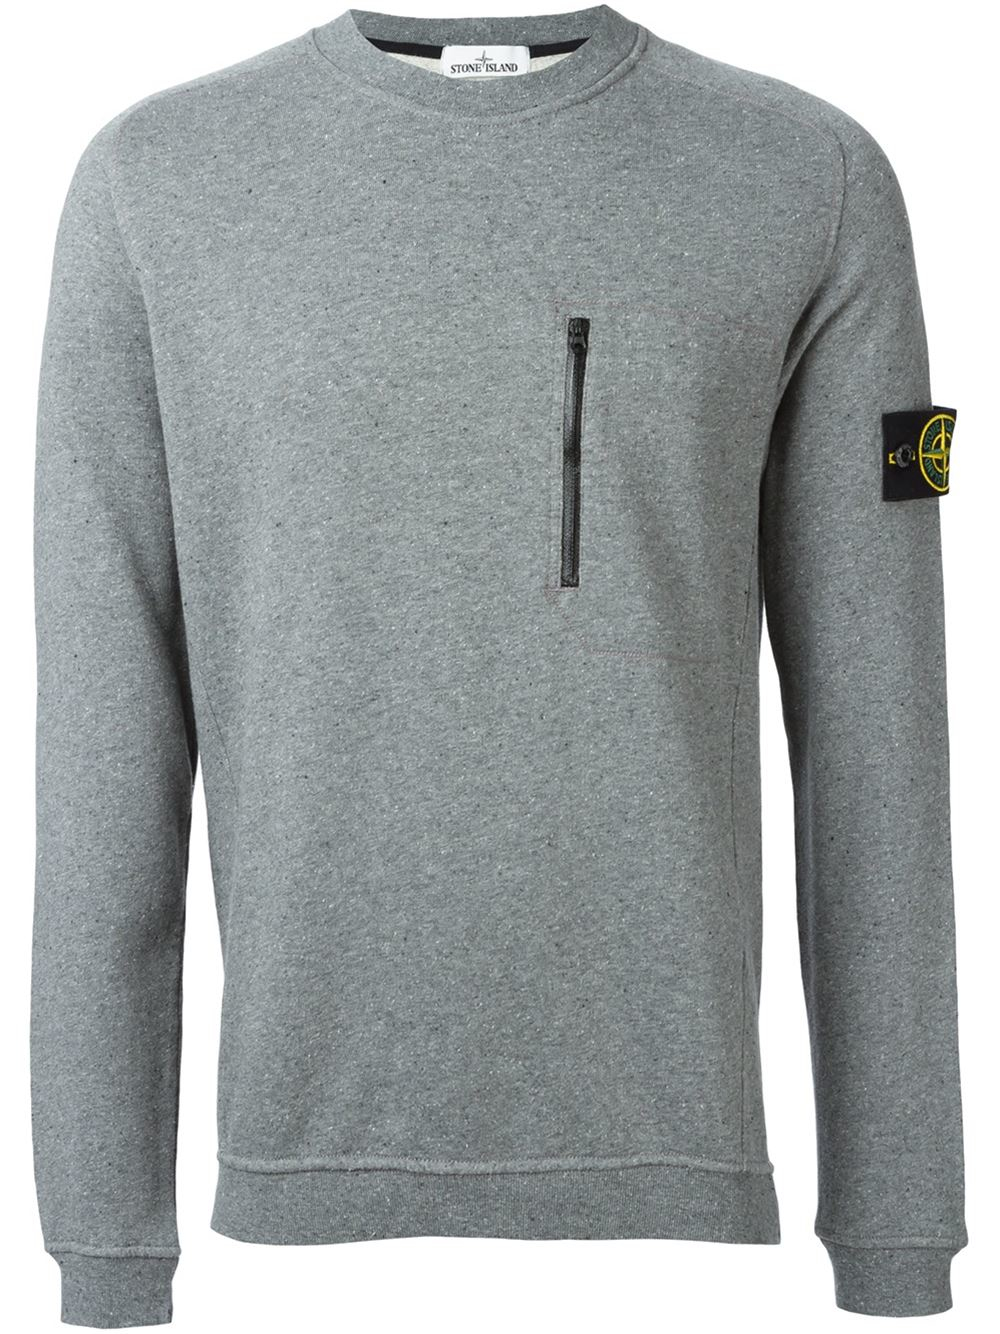 Stone Island Zip Chest Pocket Sweatshirt in Grey (Gray) for Men - Lyst